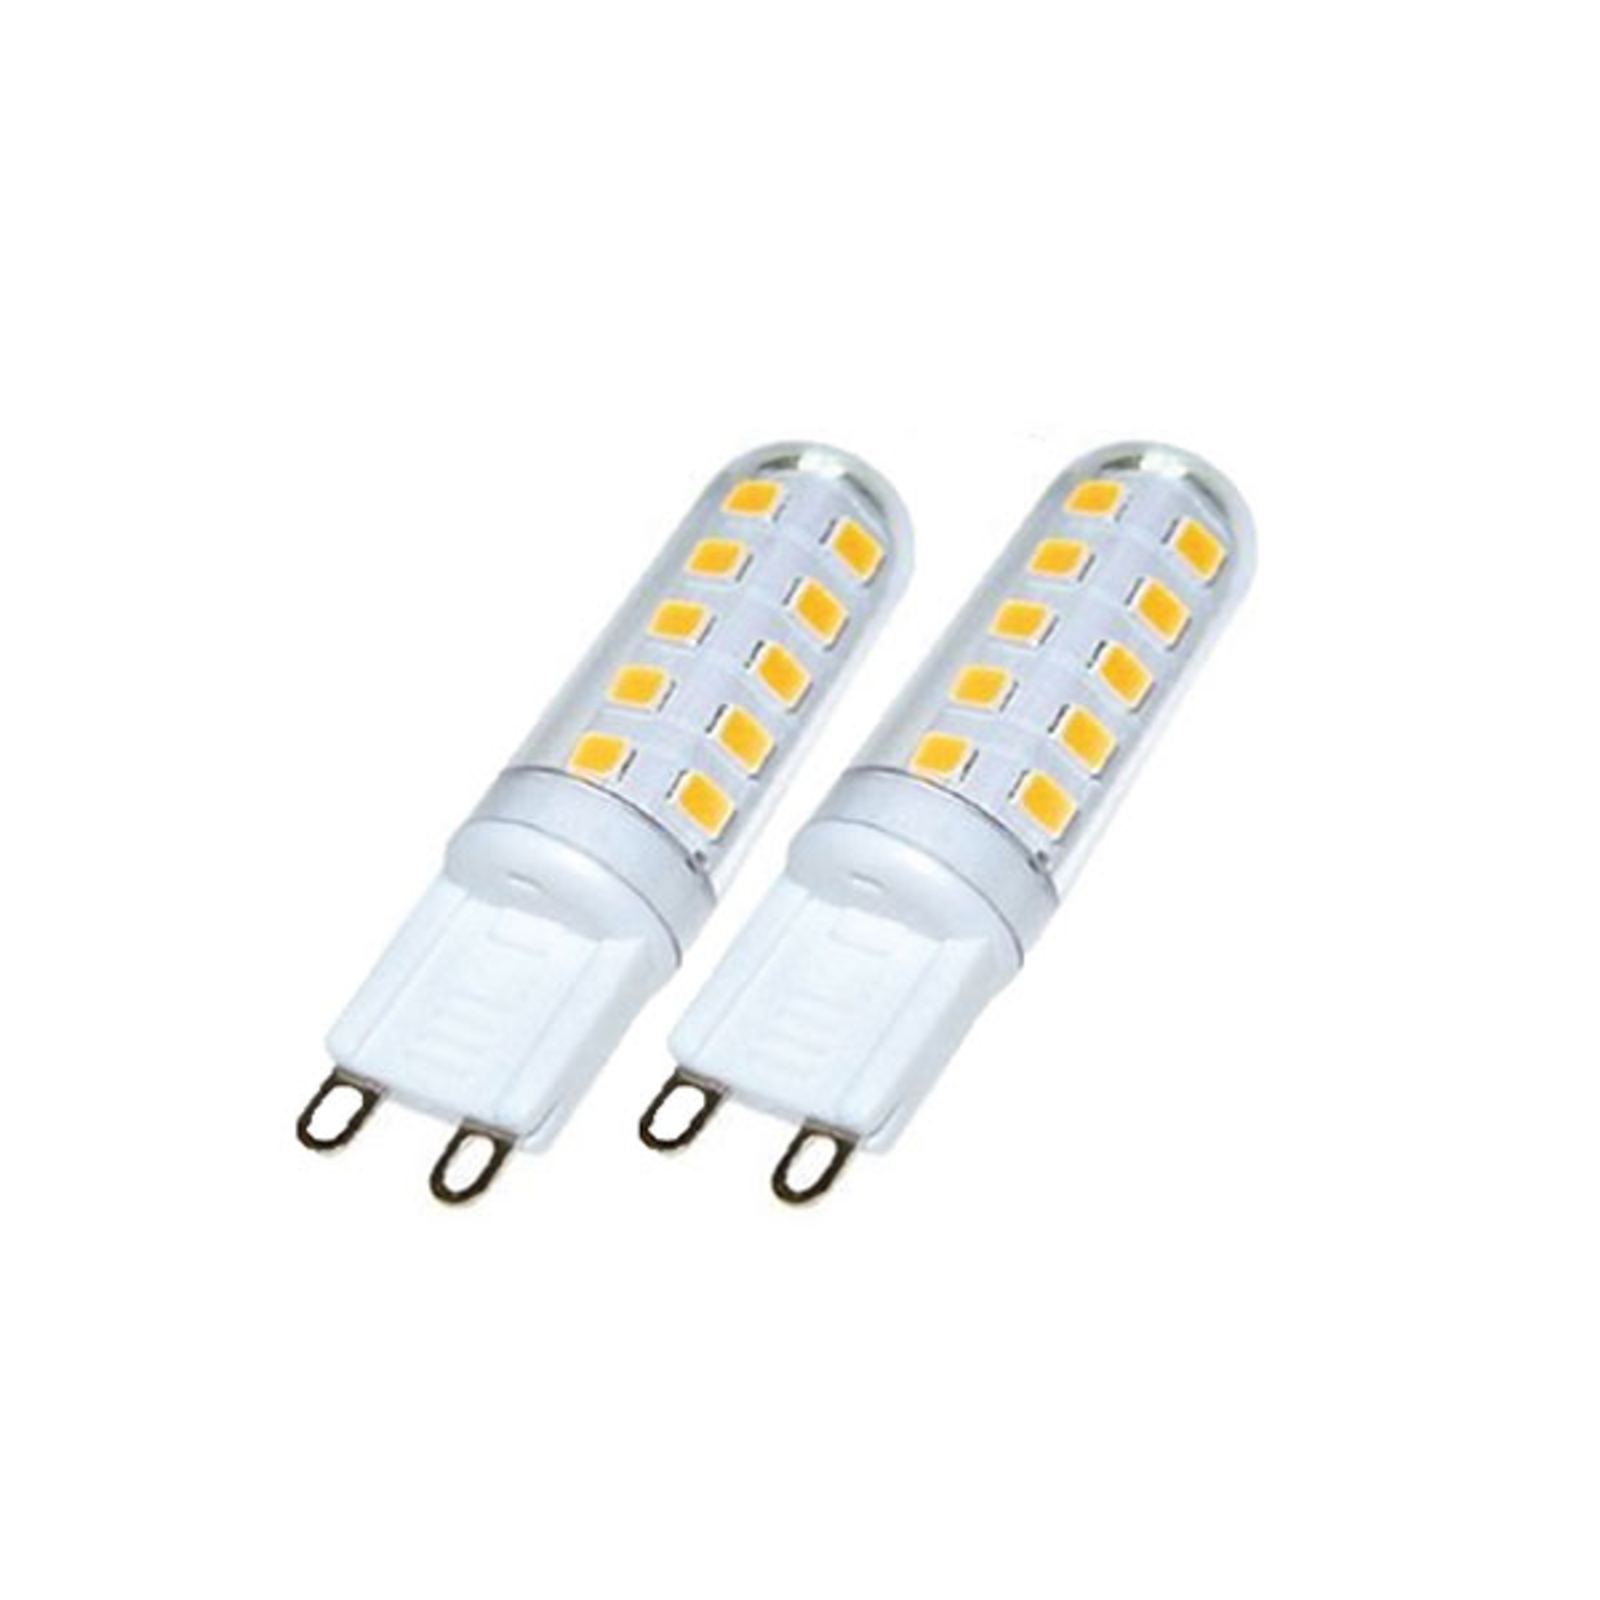 LED-stiftlampa G9 3W i 2-pack, dimbar